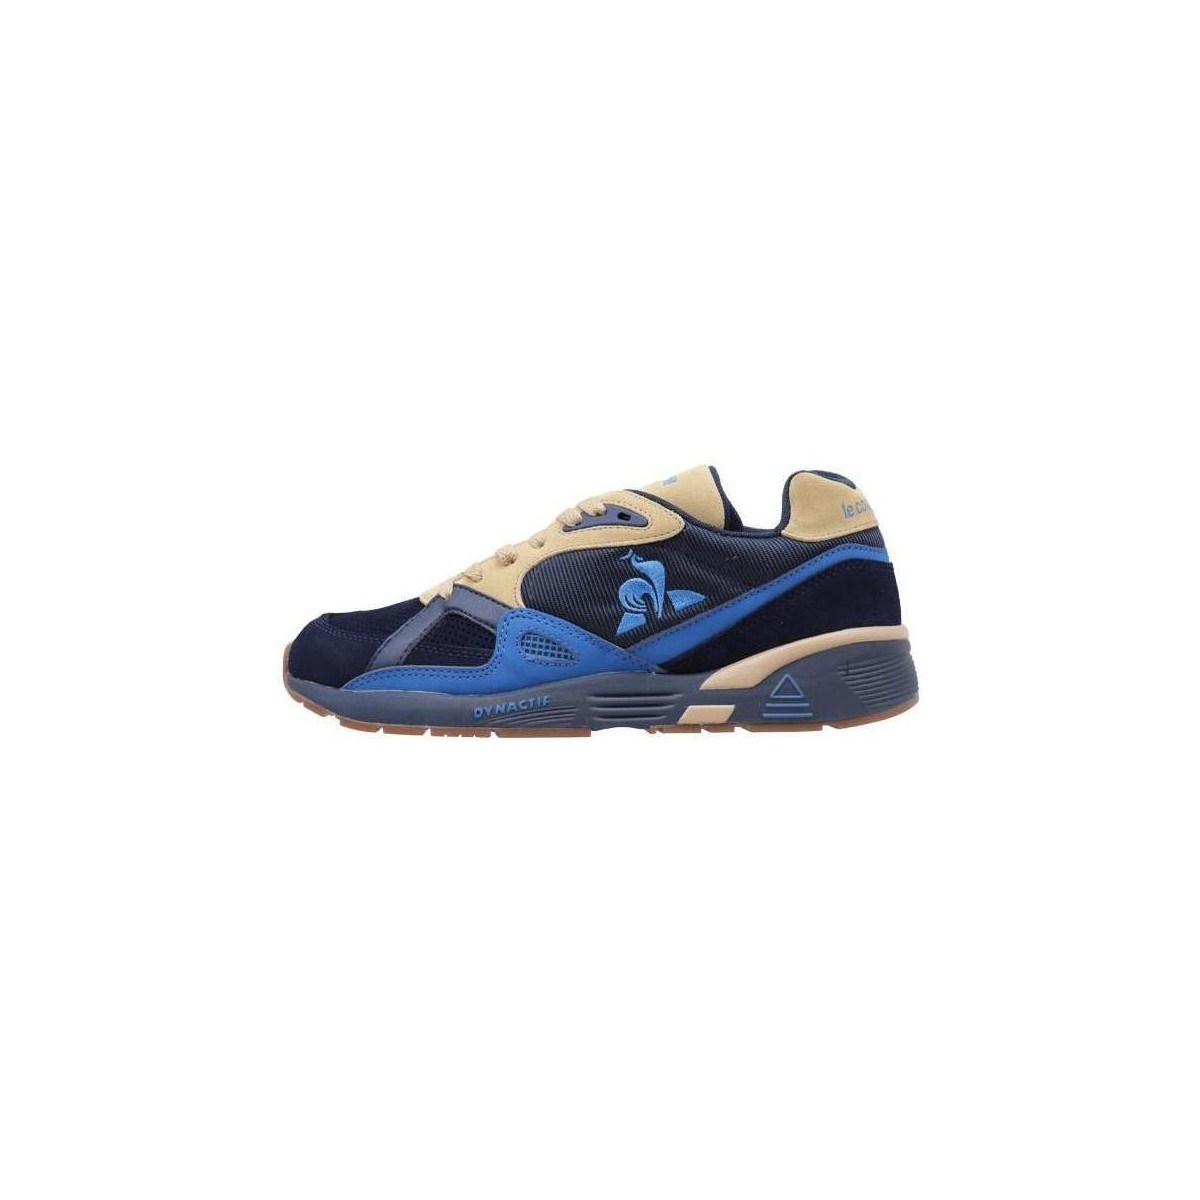 Schuhe Herren Sneaker Low Le Coq Sportif LCS R850 WINTER CRAFT Blau